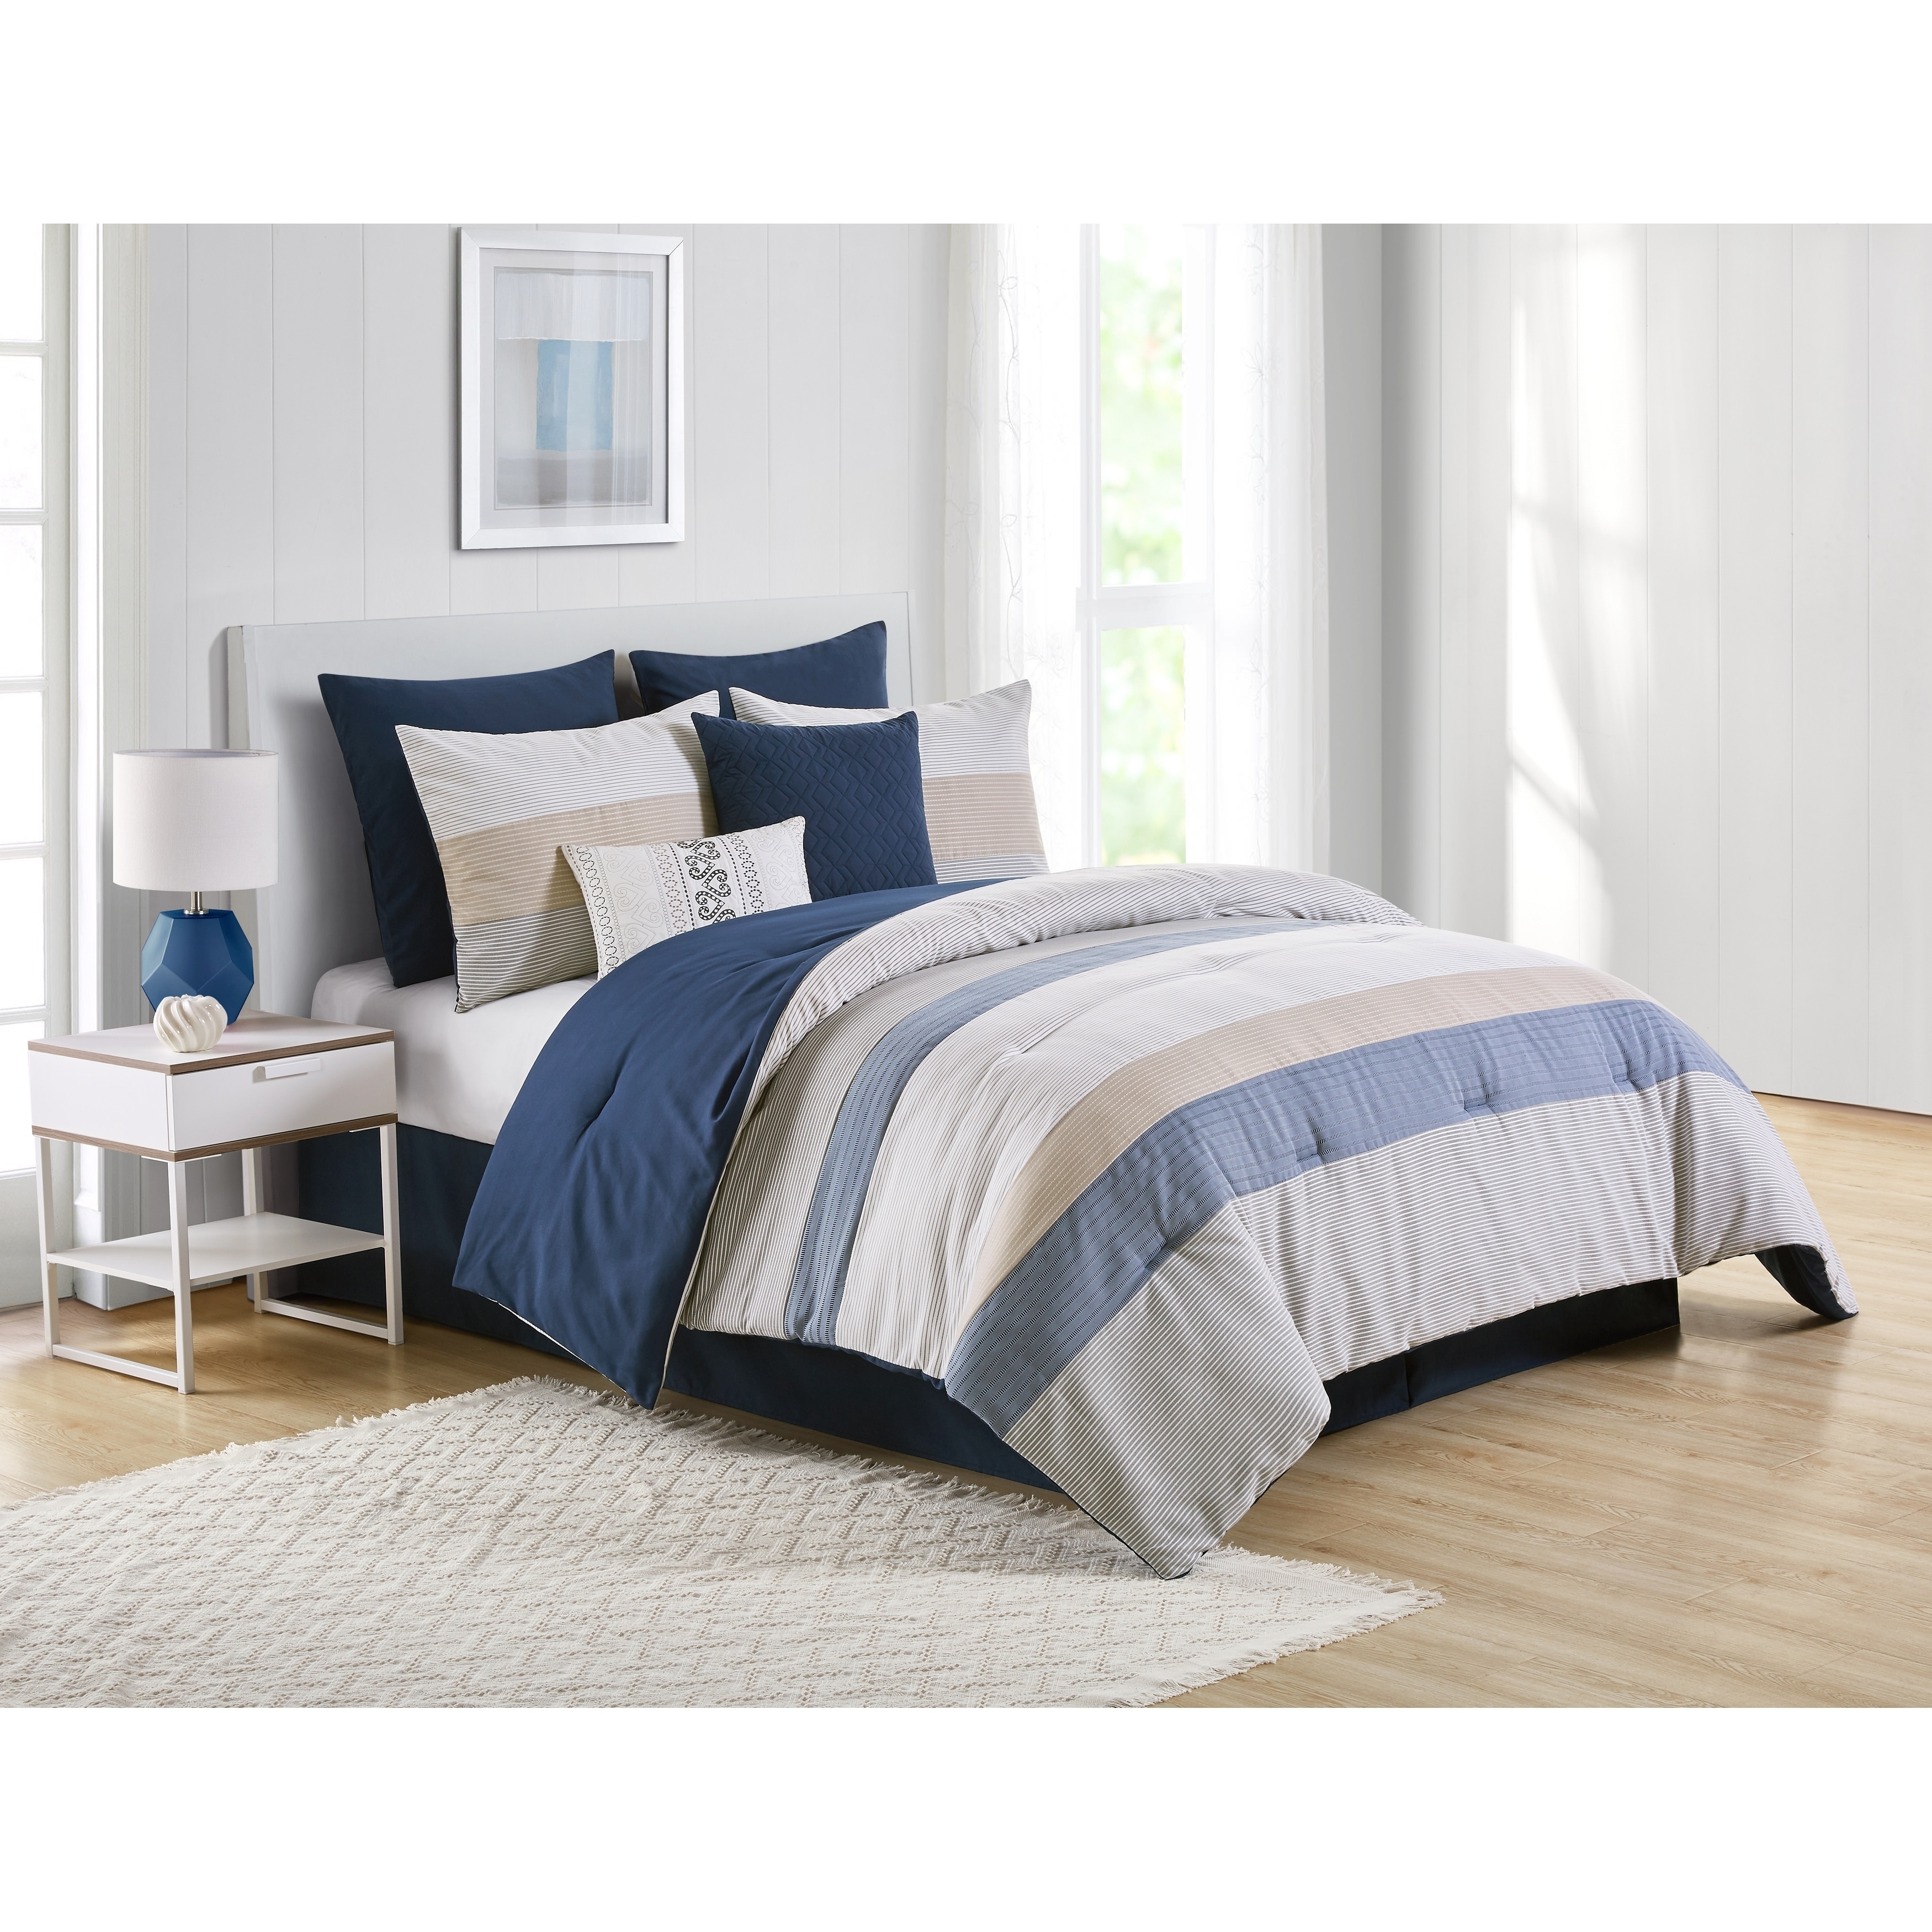 Shop Vcny Home Drover Stripe Blue And Beige Comforter Set On